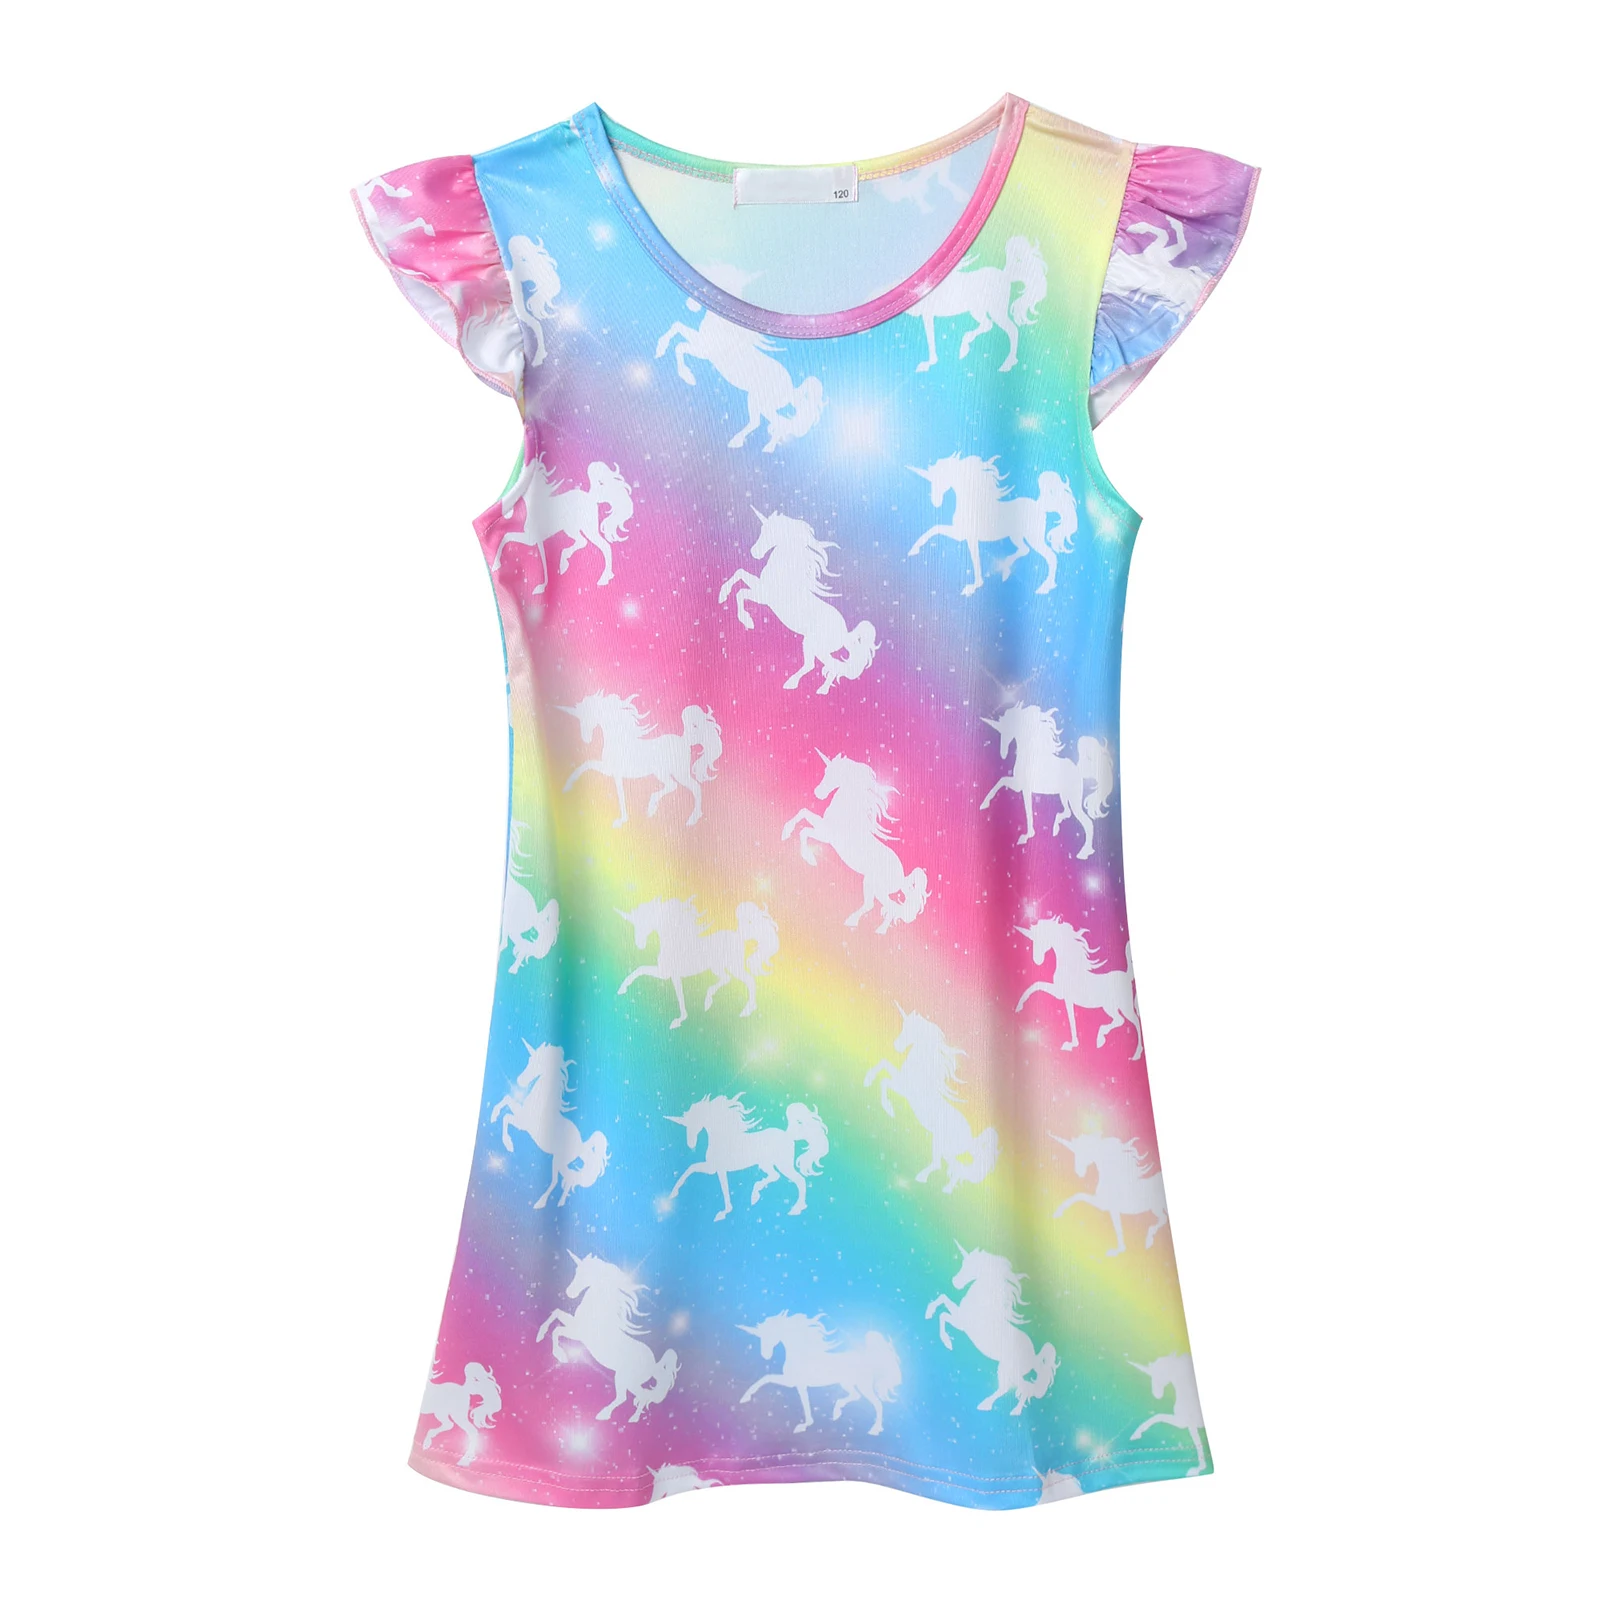 Sweet Girls Cartoon Rainbow Printed Nightdress Children Summer Ruffle Princess Sleepwear Nightgown Kids Home Wear Pajamas